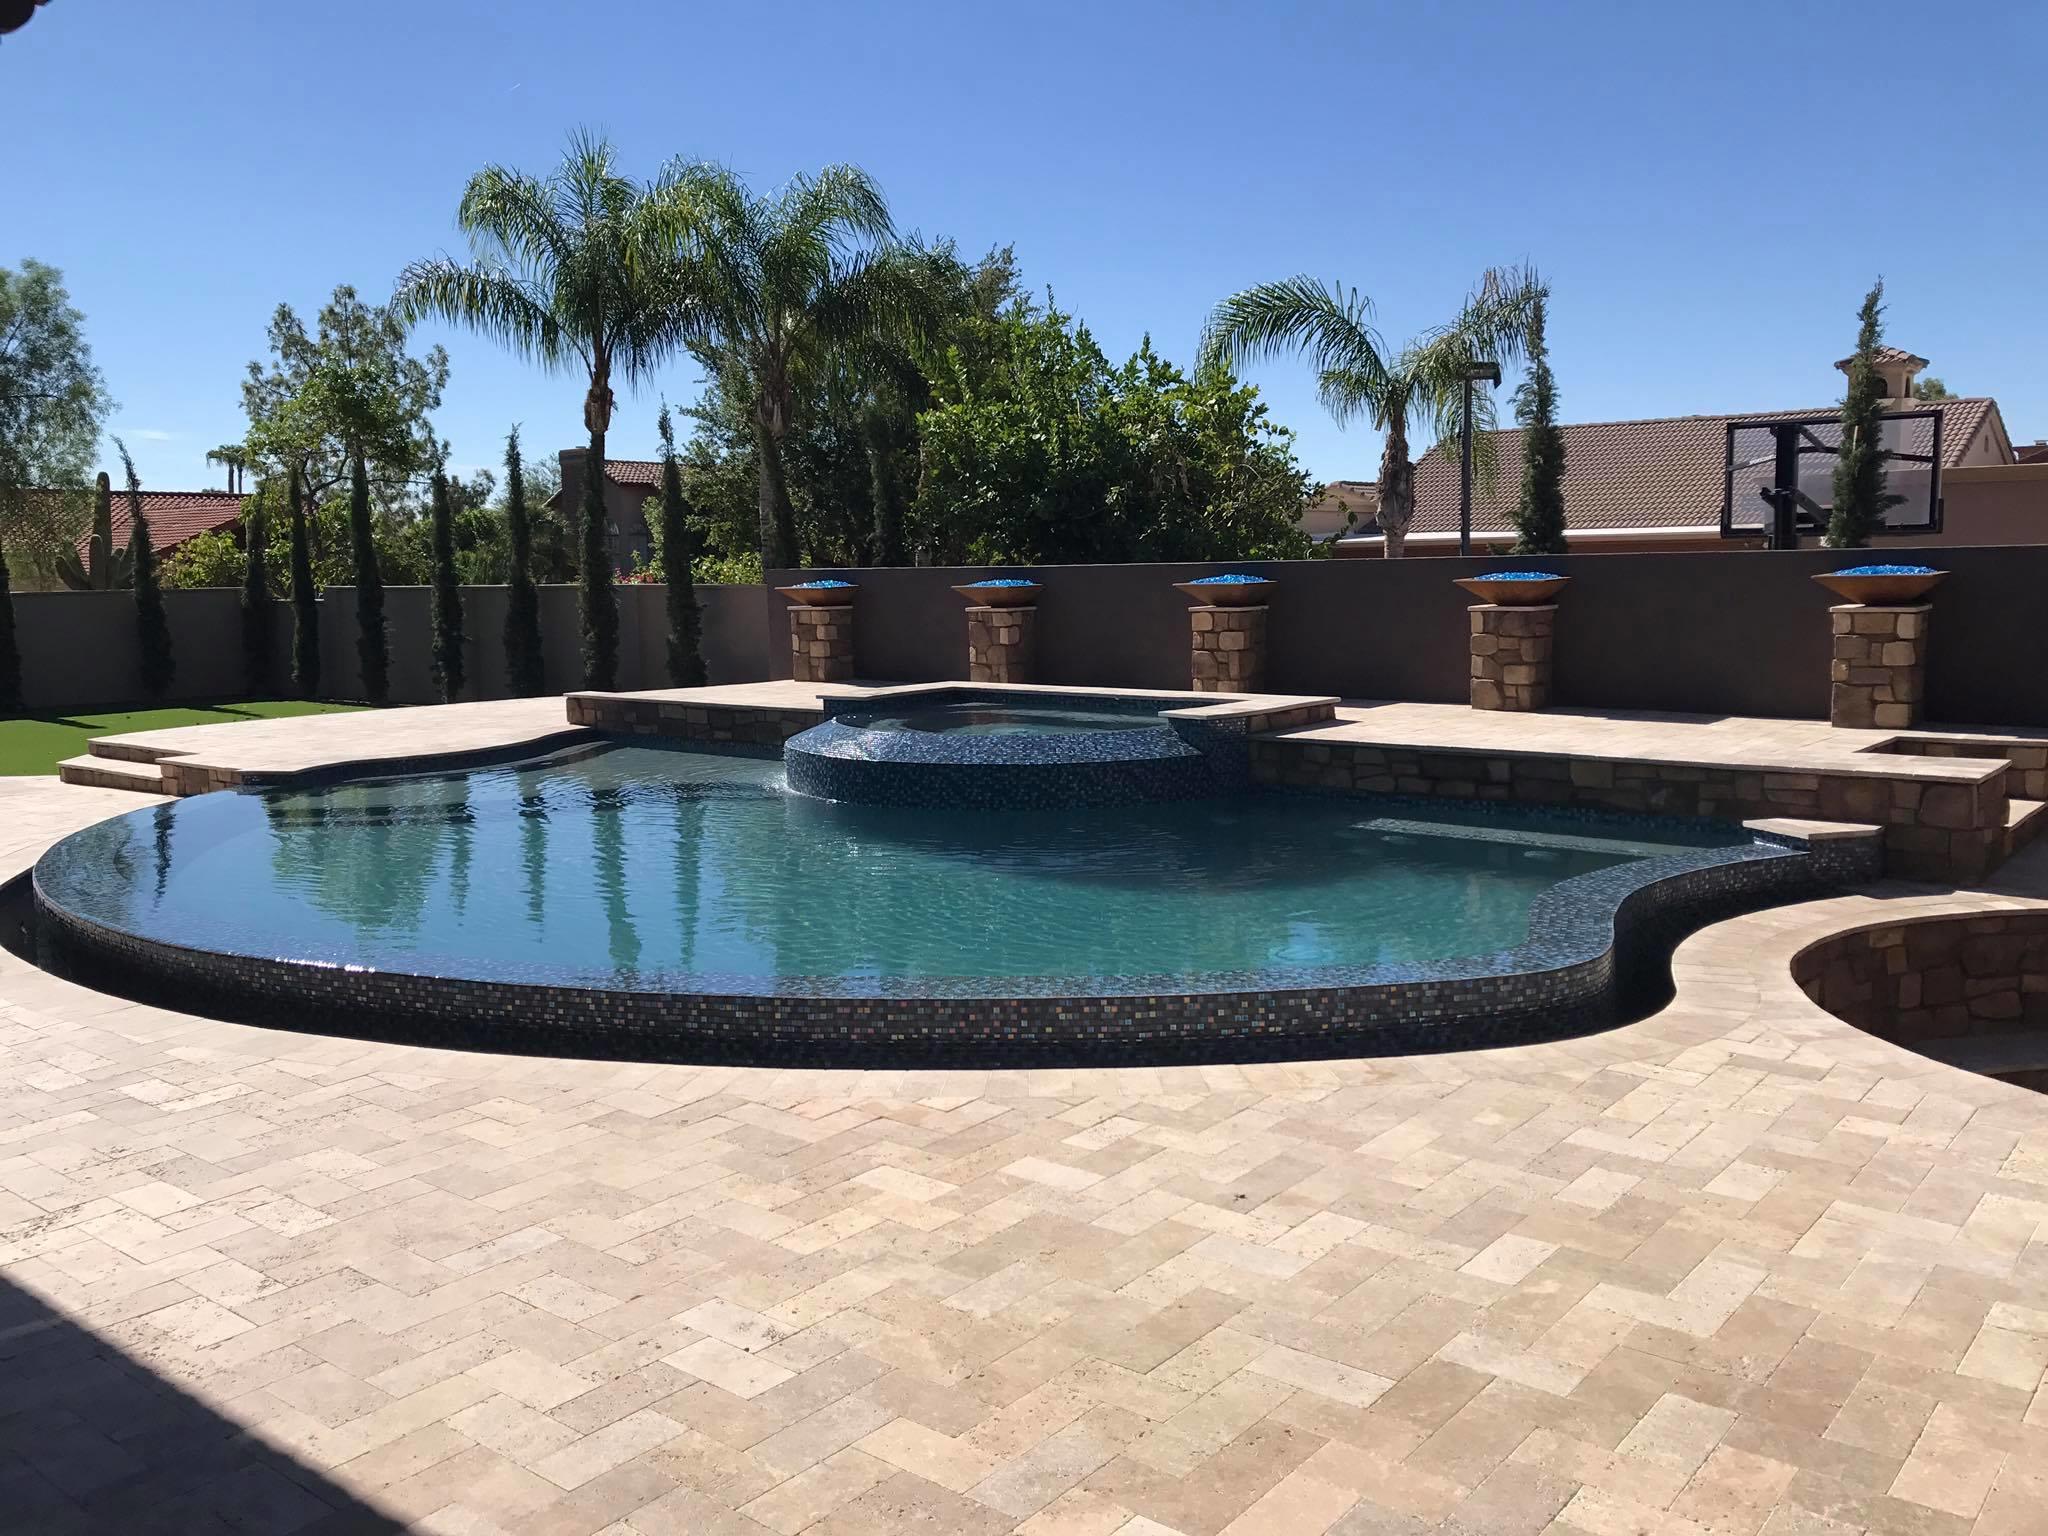 Beautiful Custom Pool Completed August 2017 No Limit Pools & Spas Mesa (602)421-9379